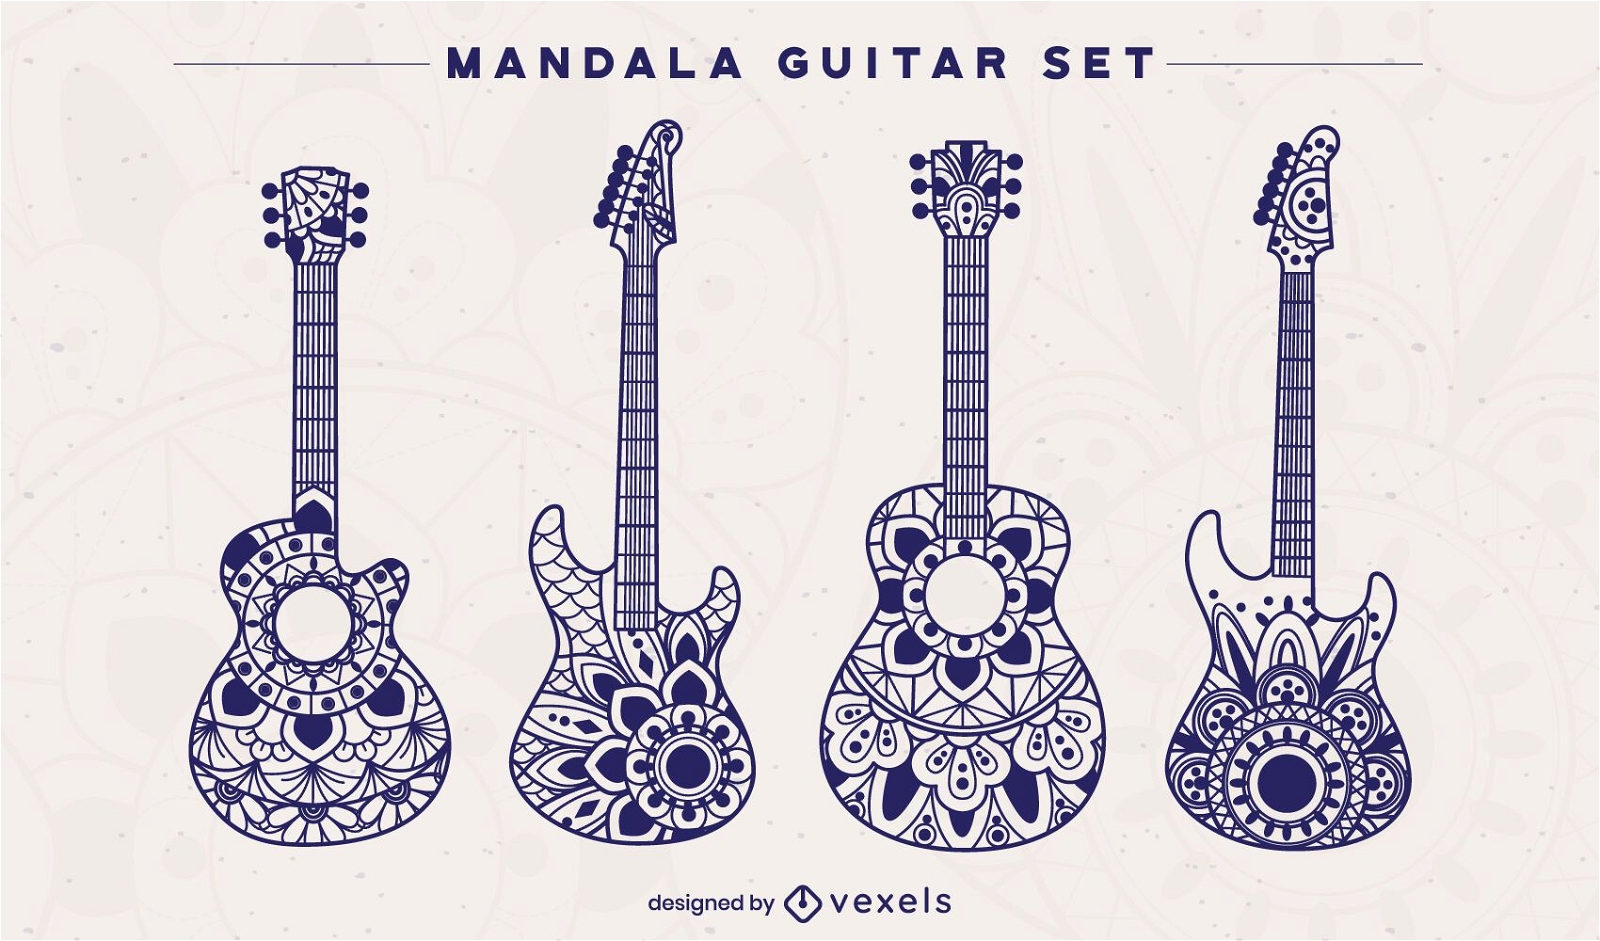 Mandala guitar set